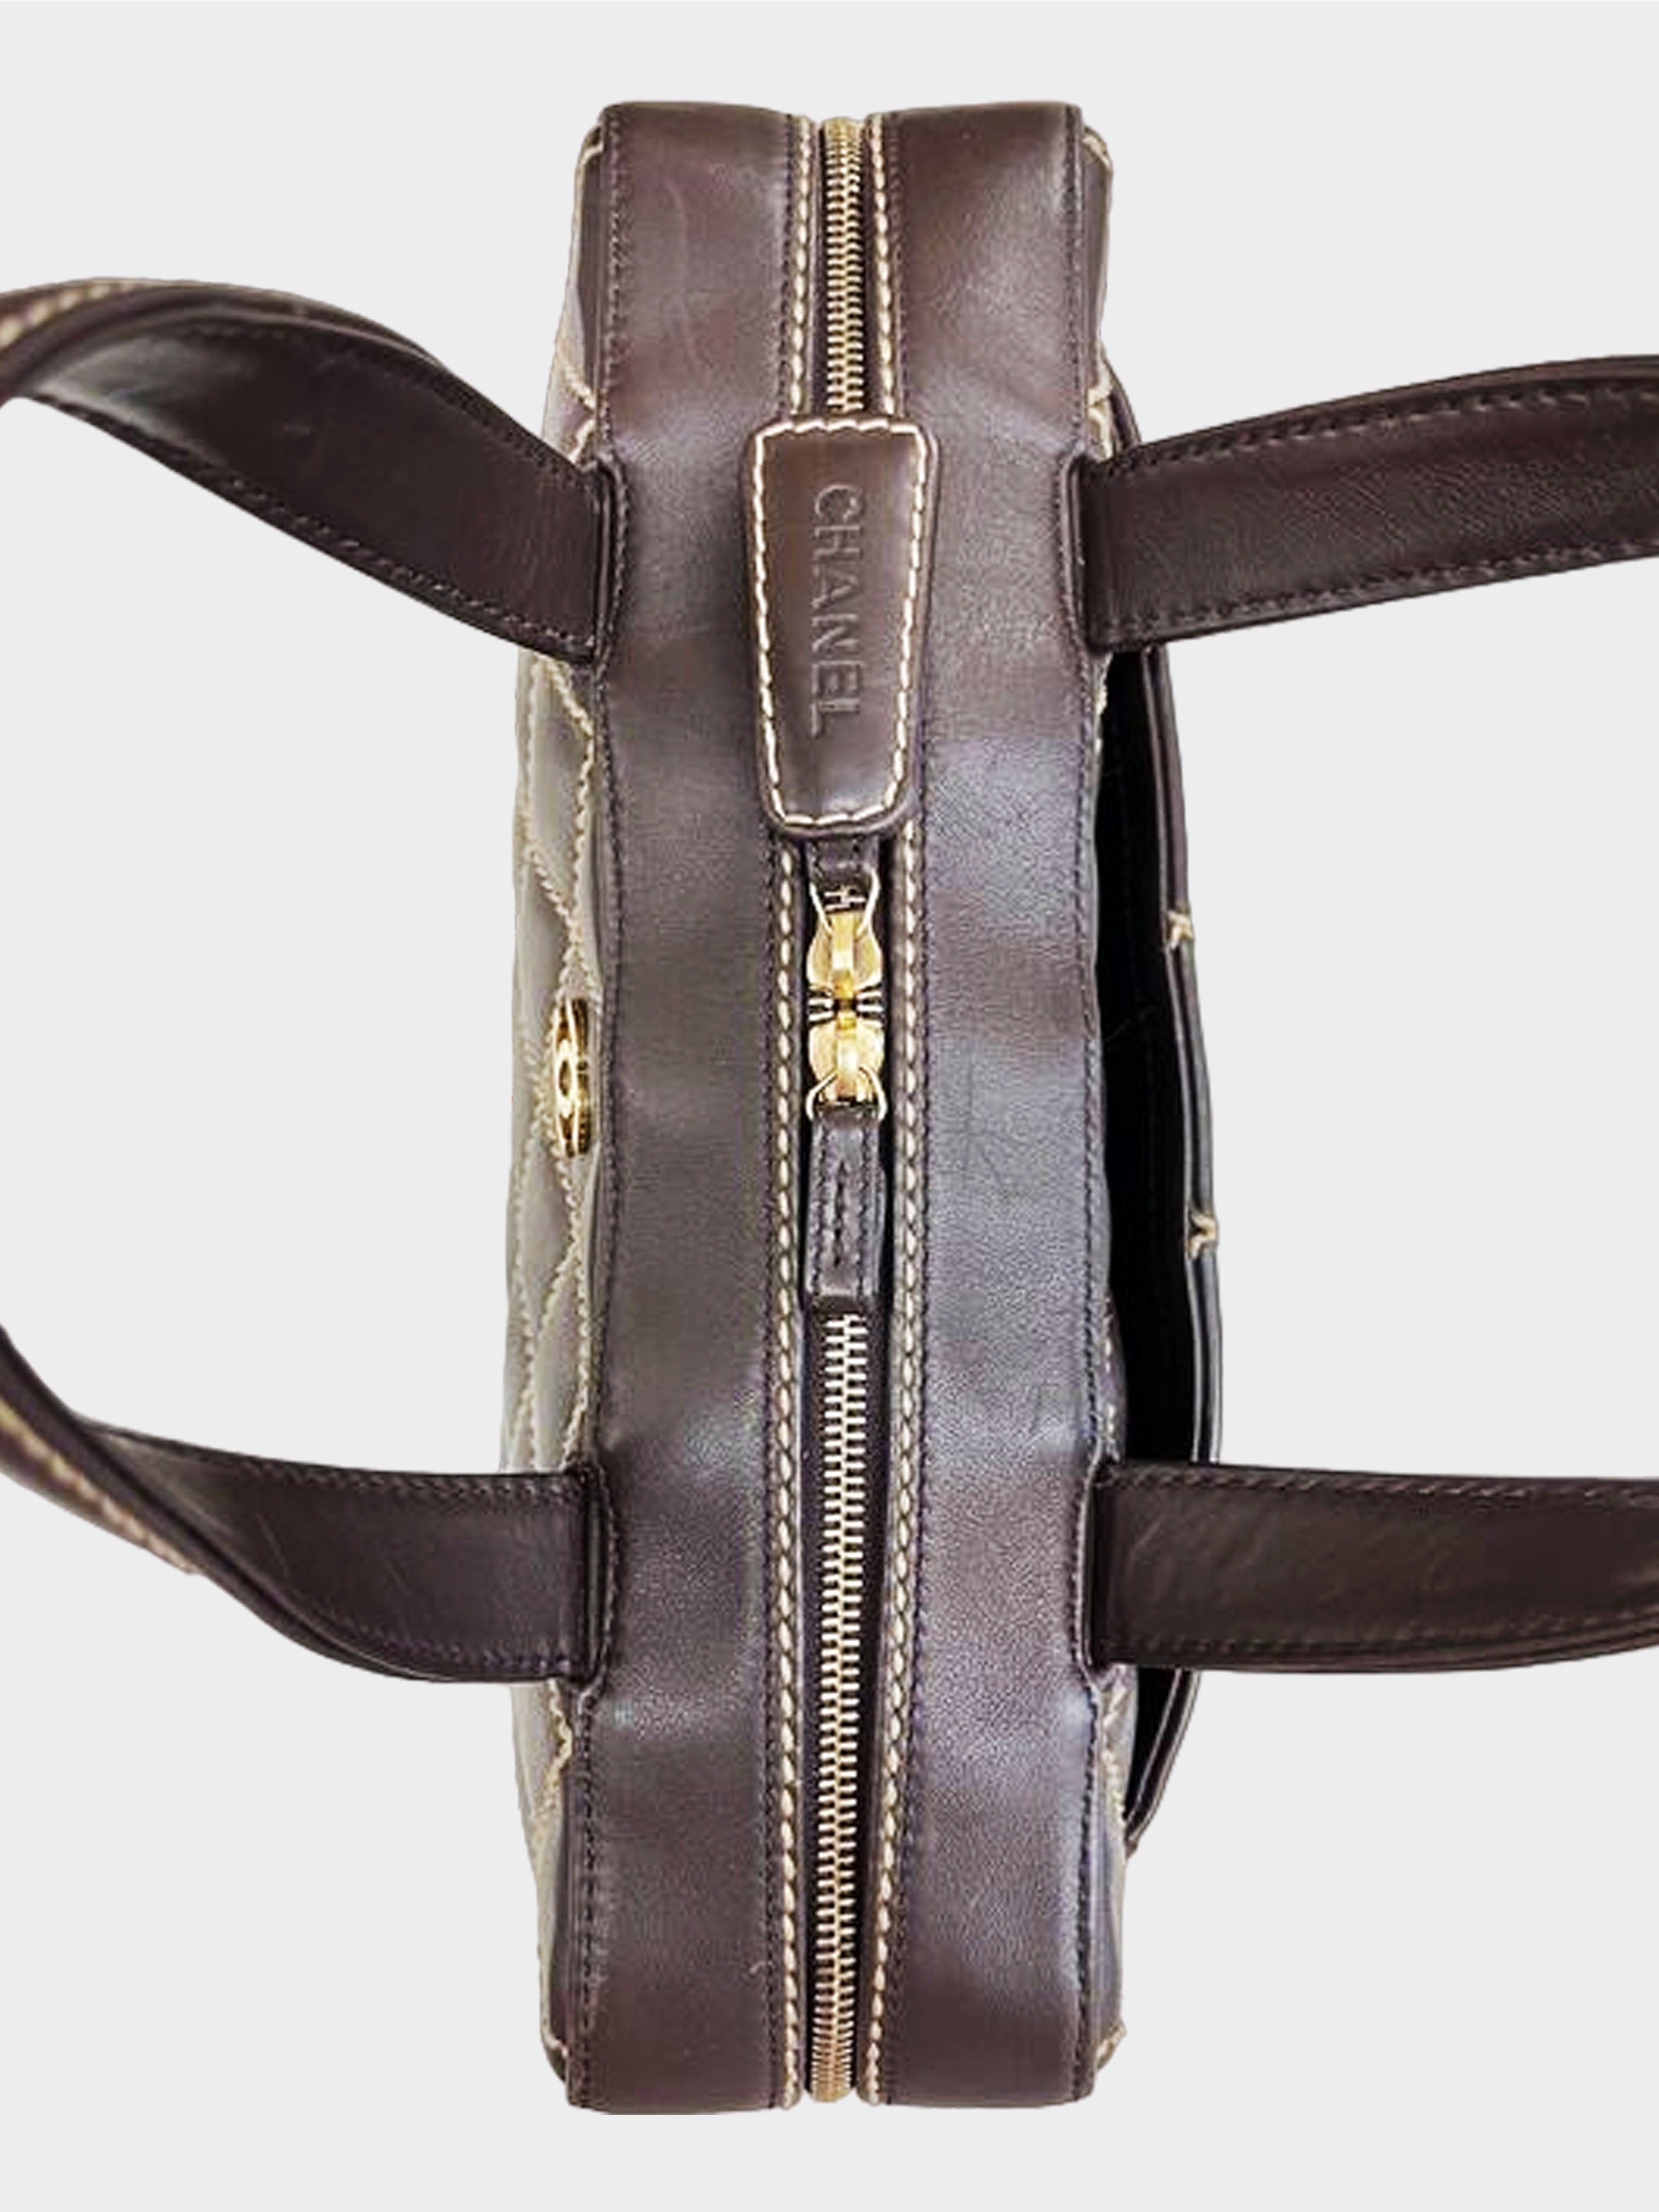 Chanel 2002 Brown Chocolate Leather Surpique Bag